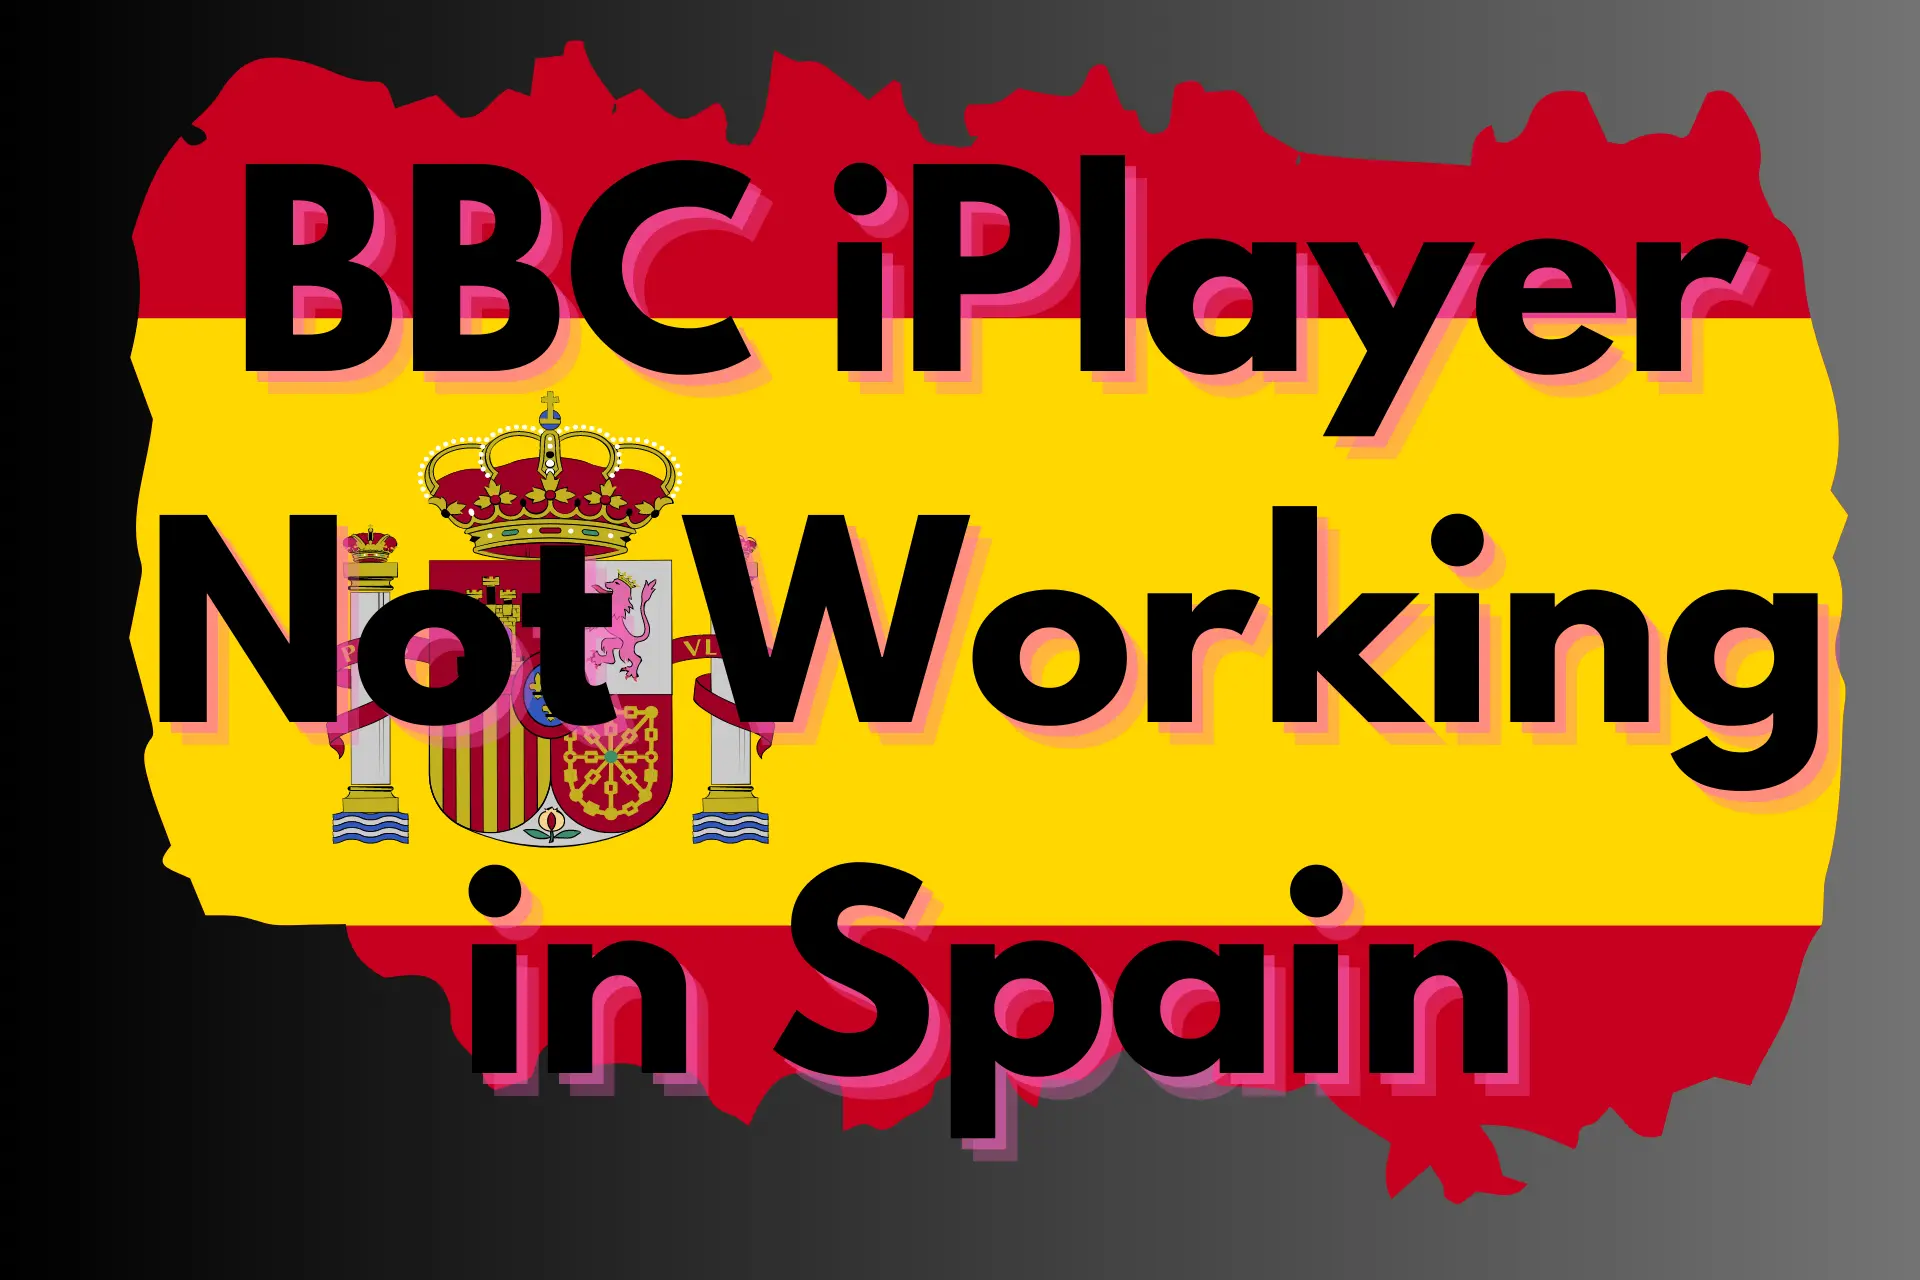 BBC iPlayer Not Working in Spain